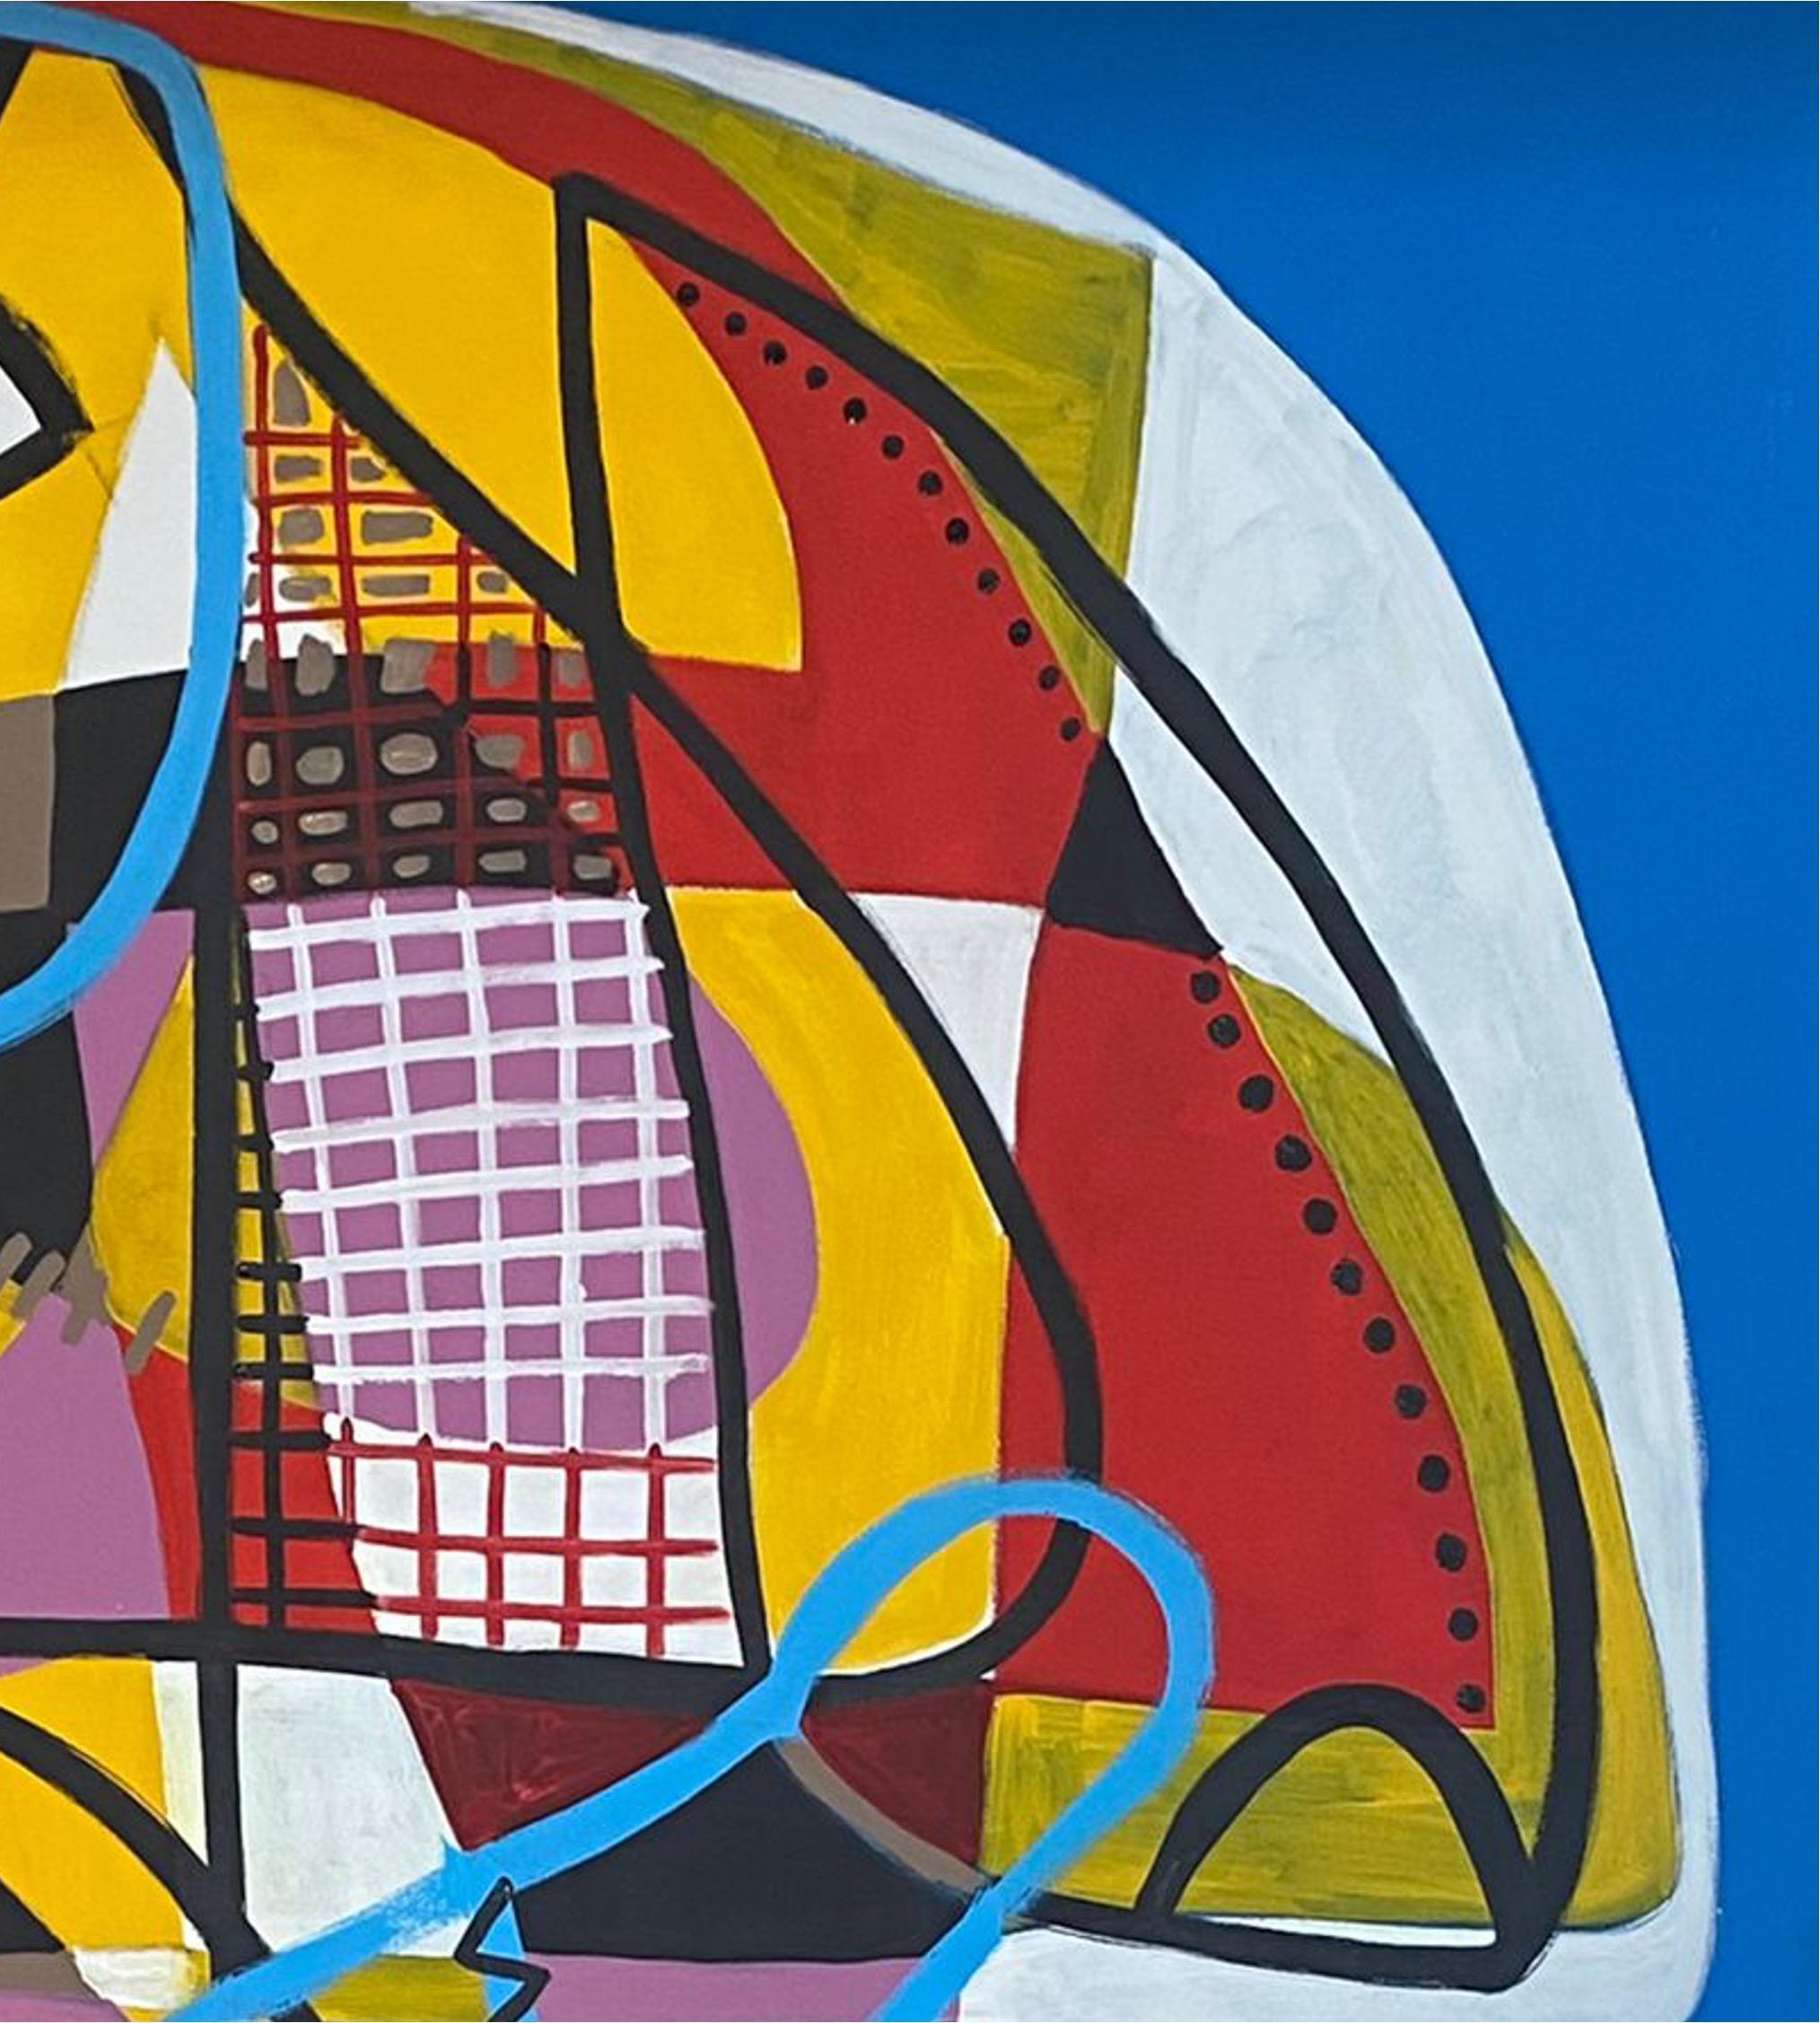 Contemporary Art, Abstract Painting
Acrylic on canvas
220x225cm
Signed 
FREE SHIPPING: Ships rolled up 



About the artist
Enrique Pichardo (Mexico City, 1973) graduated from Escuela Nacional de Pintura, Escultura y Grabado (ENPEG) “La Esmeralda”.